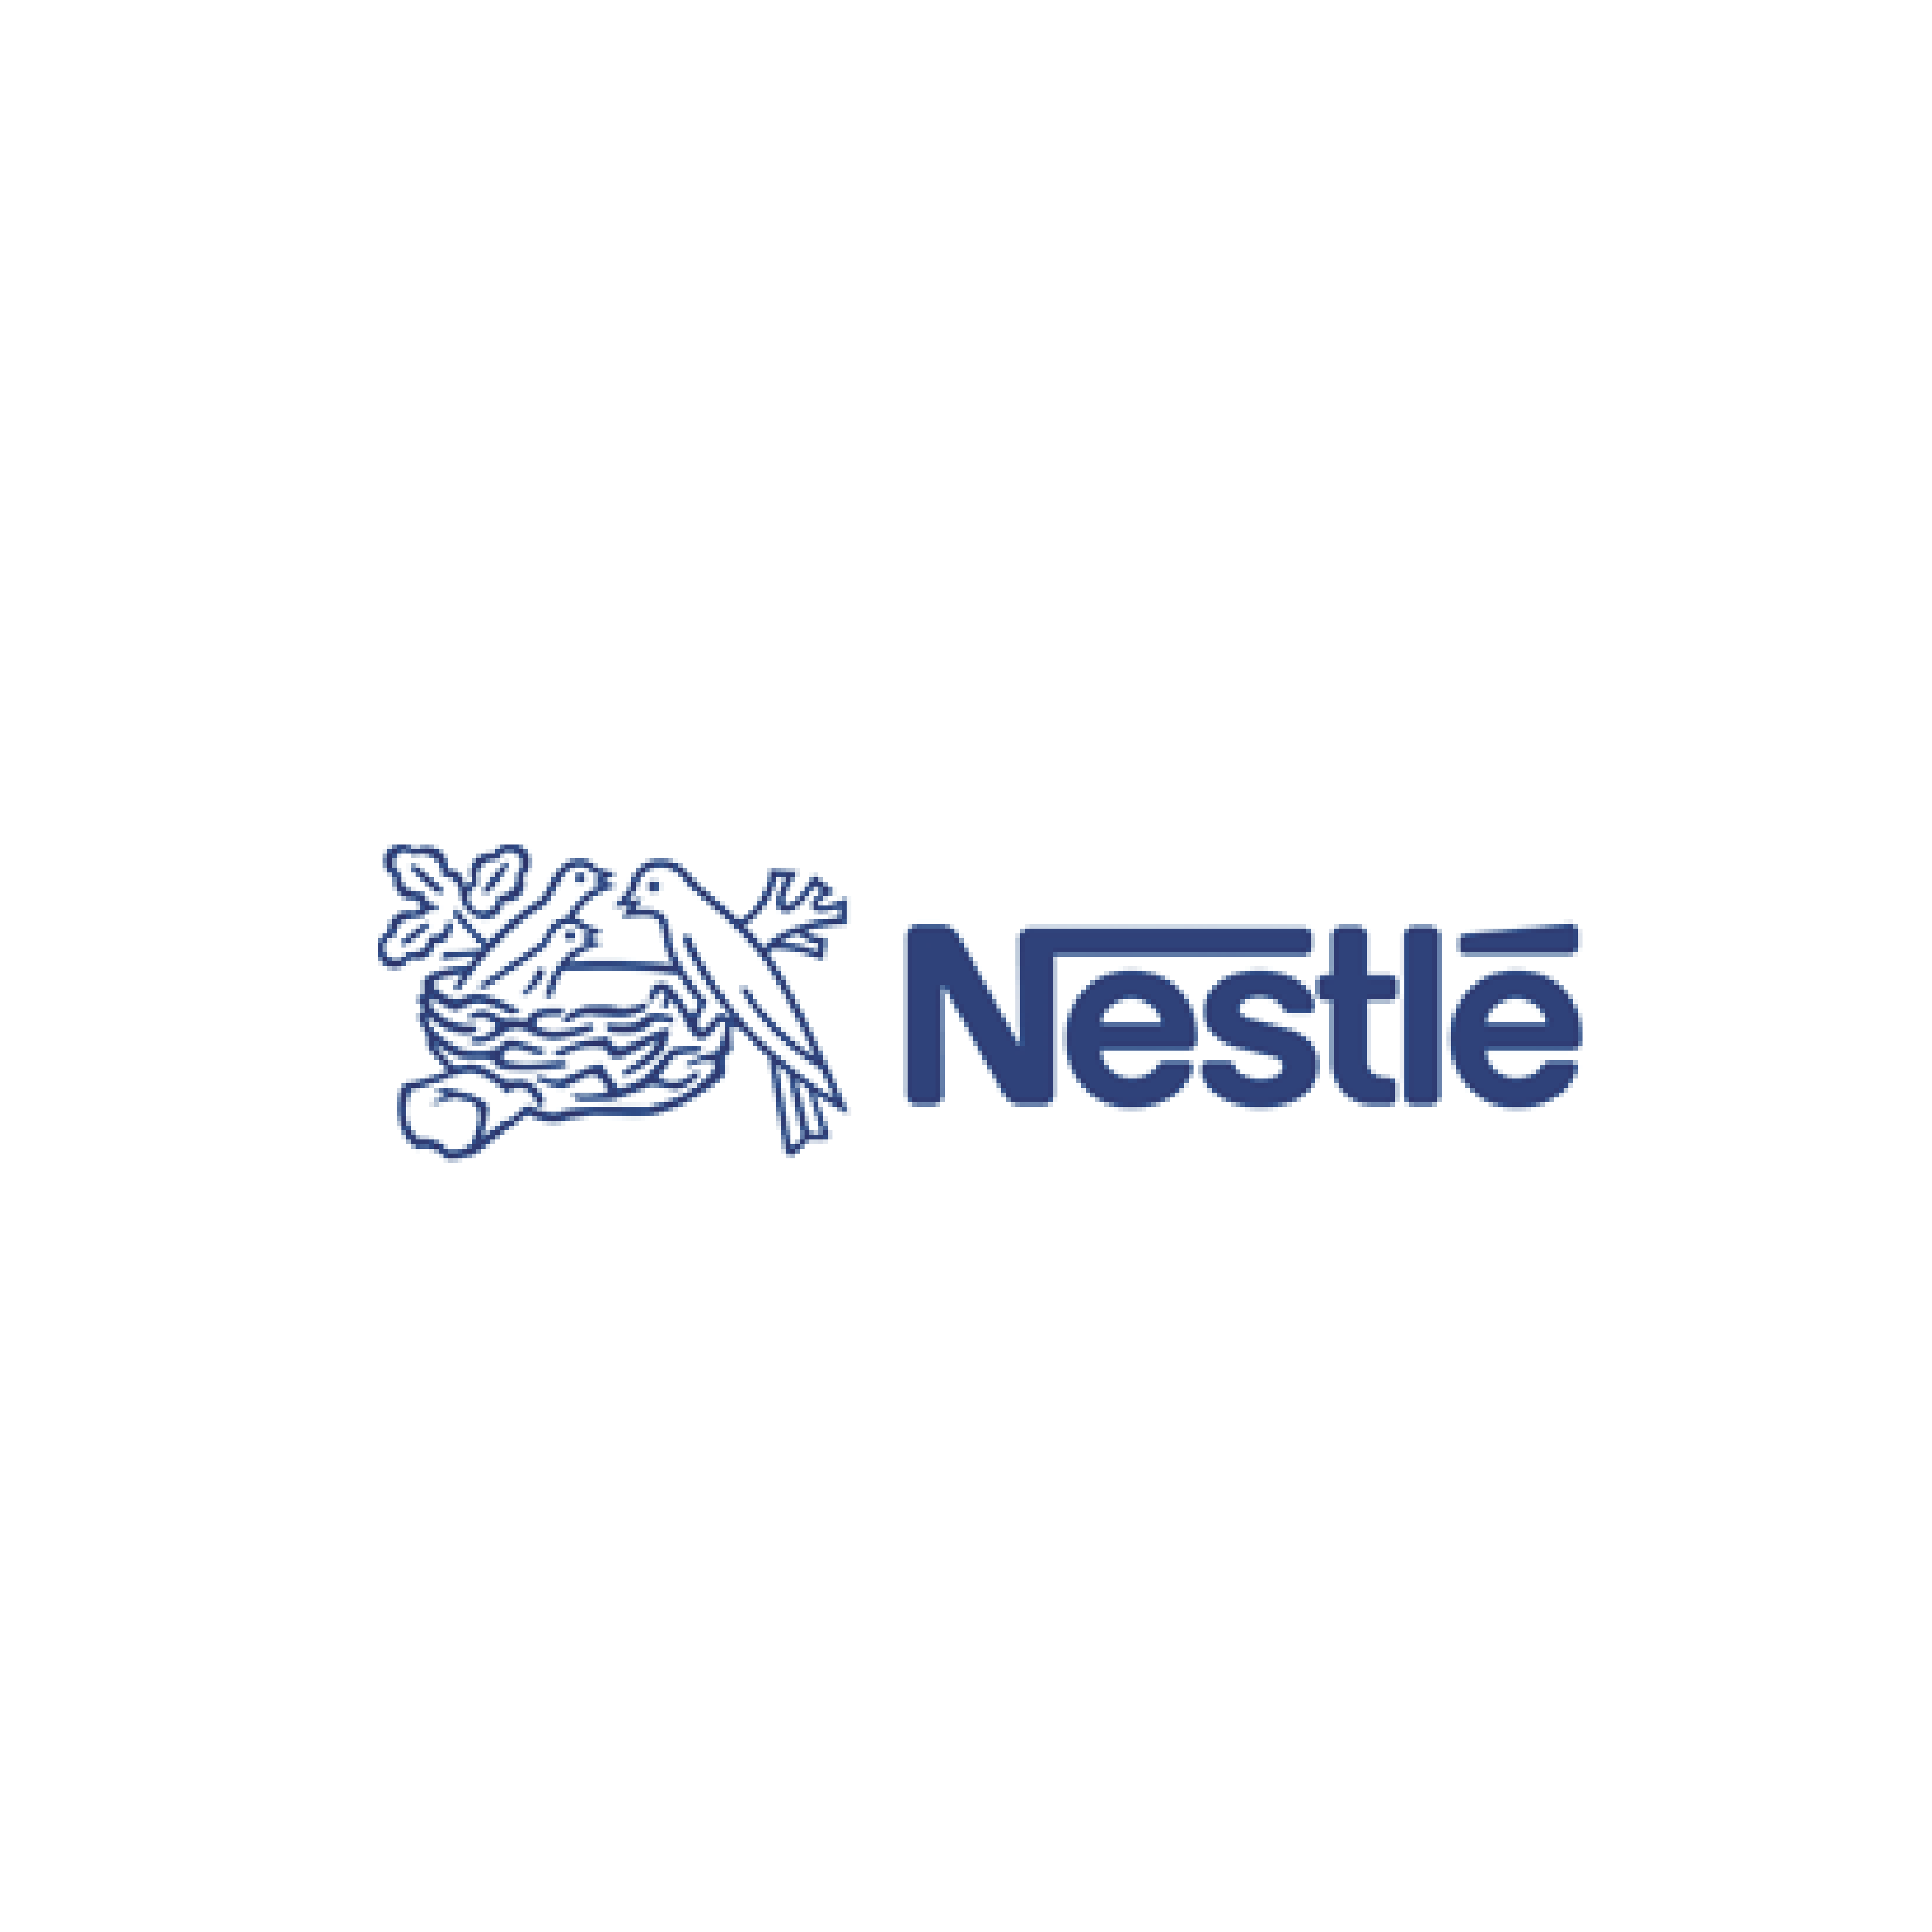 logos- Nestle